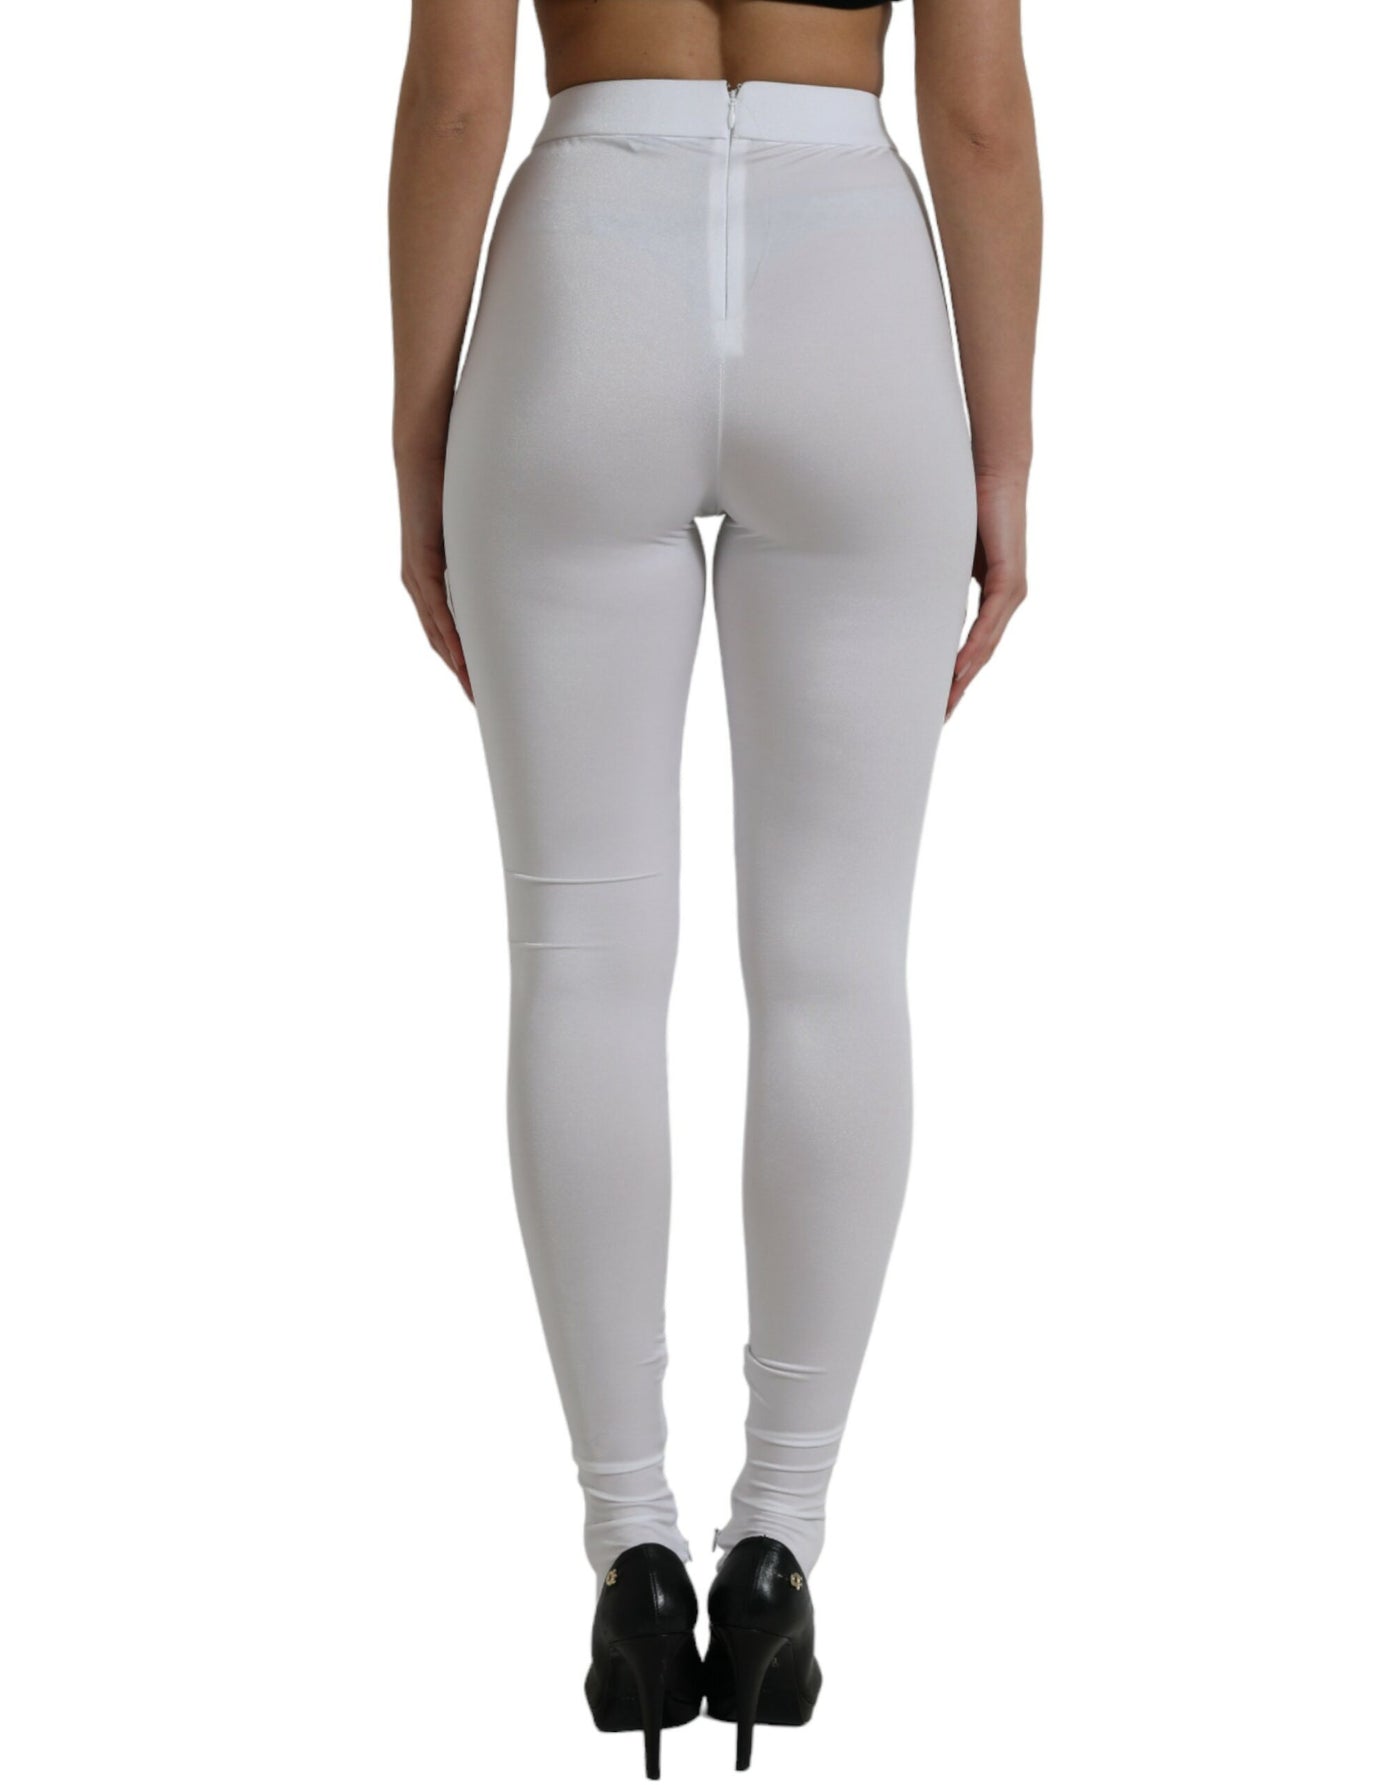 Dolce & Gabbana White Nylon Stretch Slim Leggings Pants